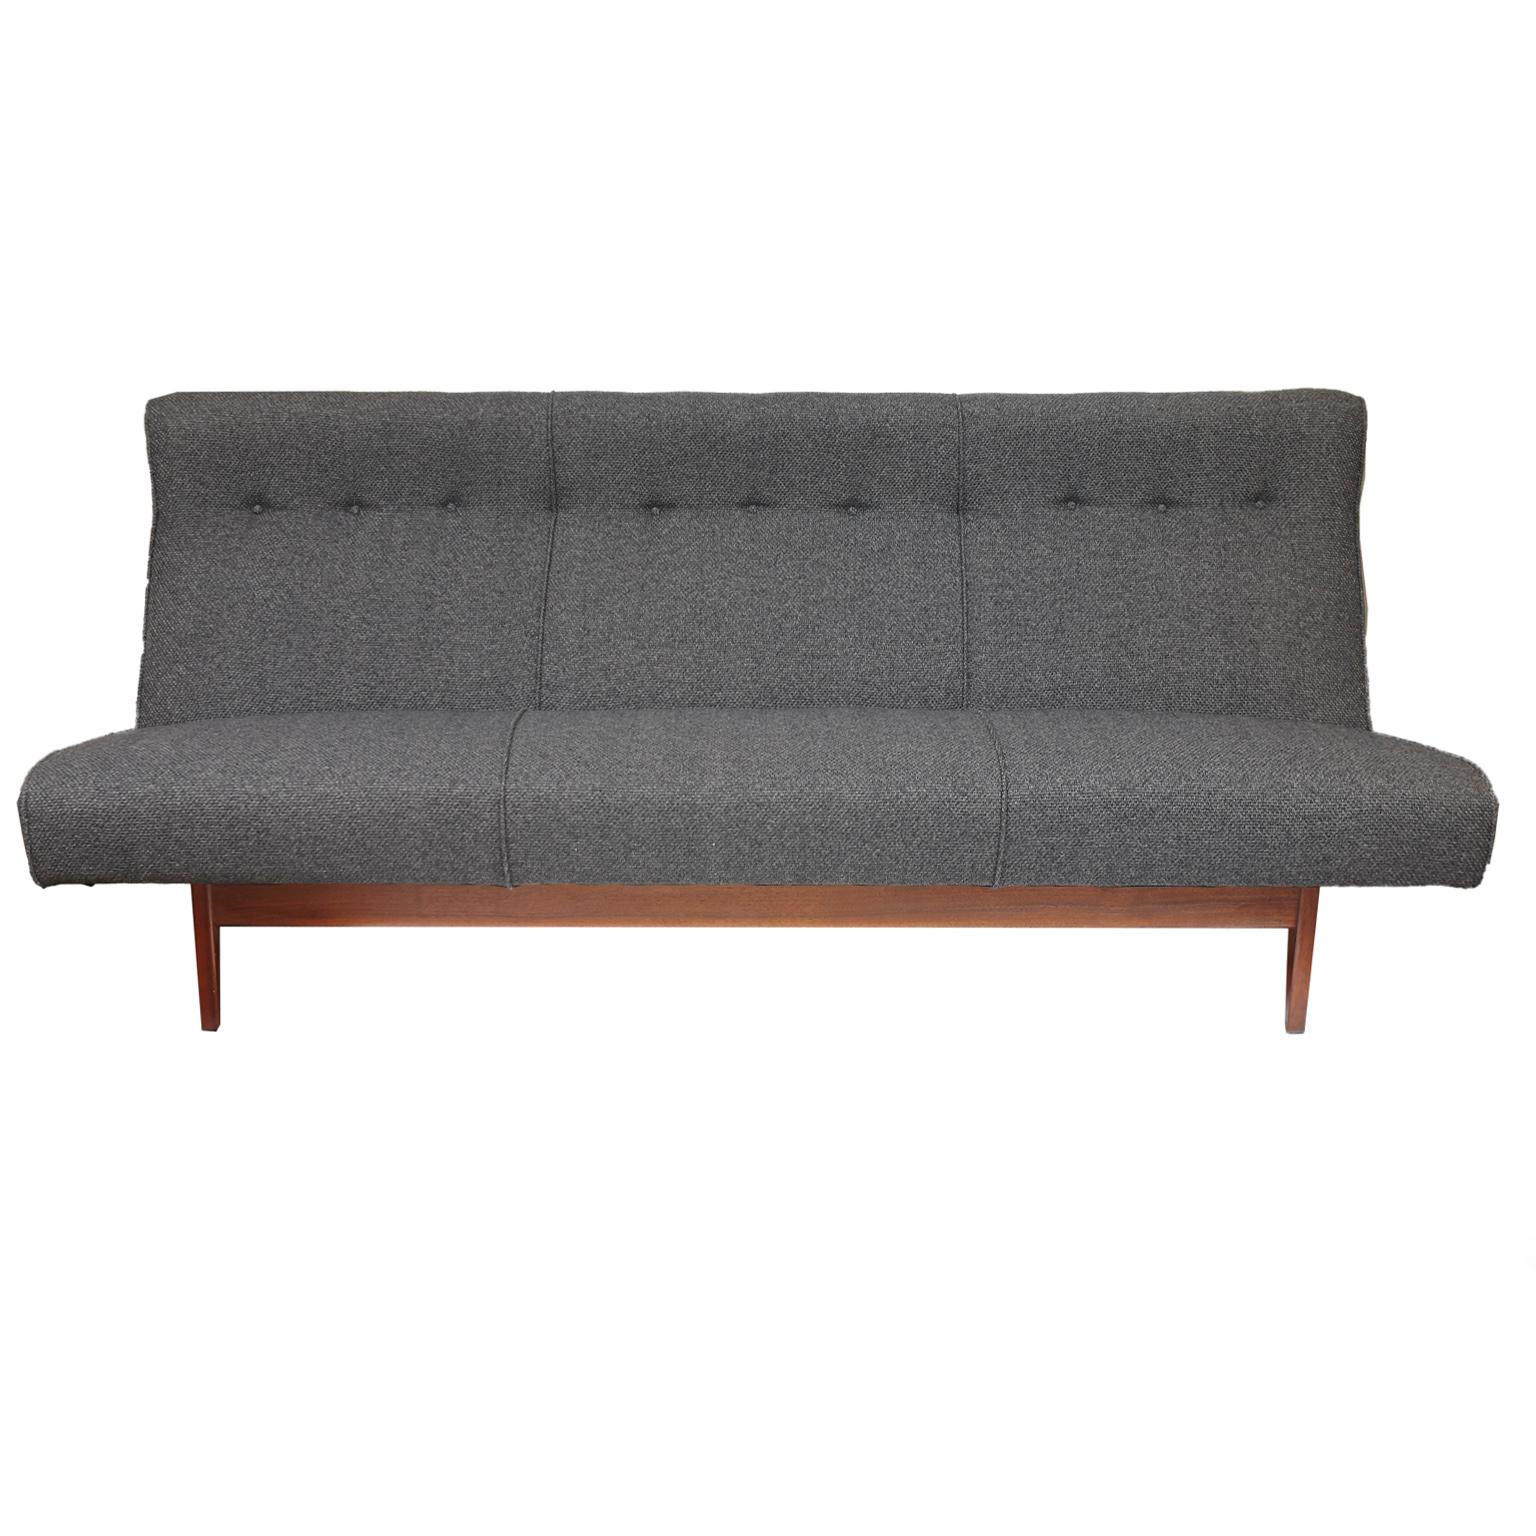 Mid-Century Modern Jens Risom Charcoal Grey Sofa and Matching Love Seat Model U251